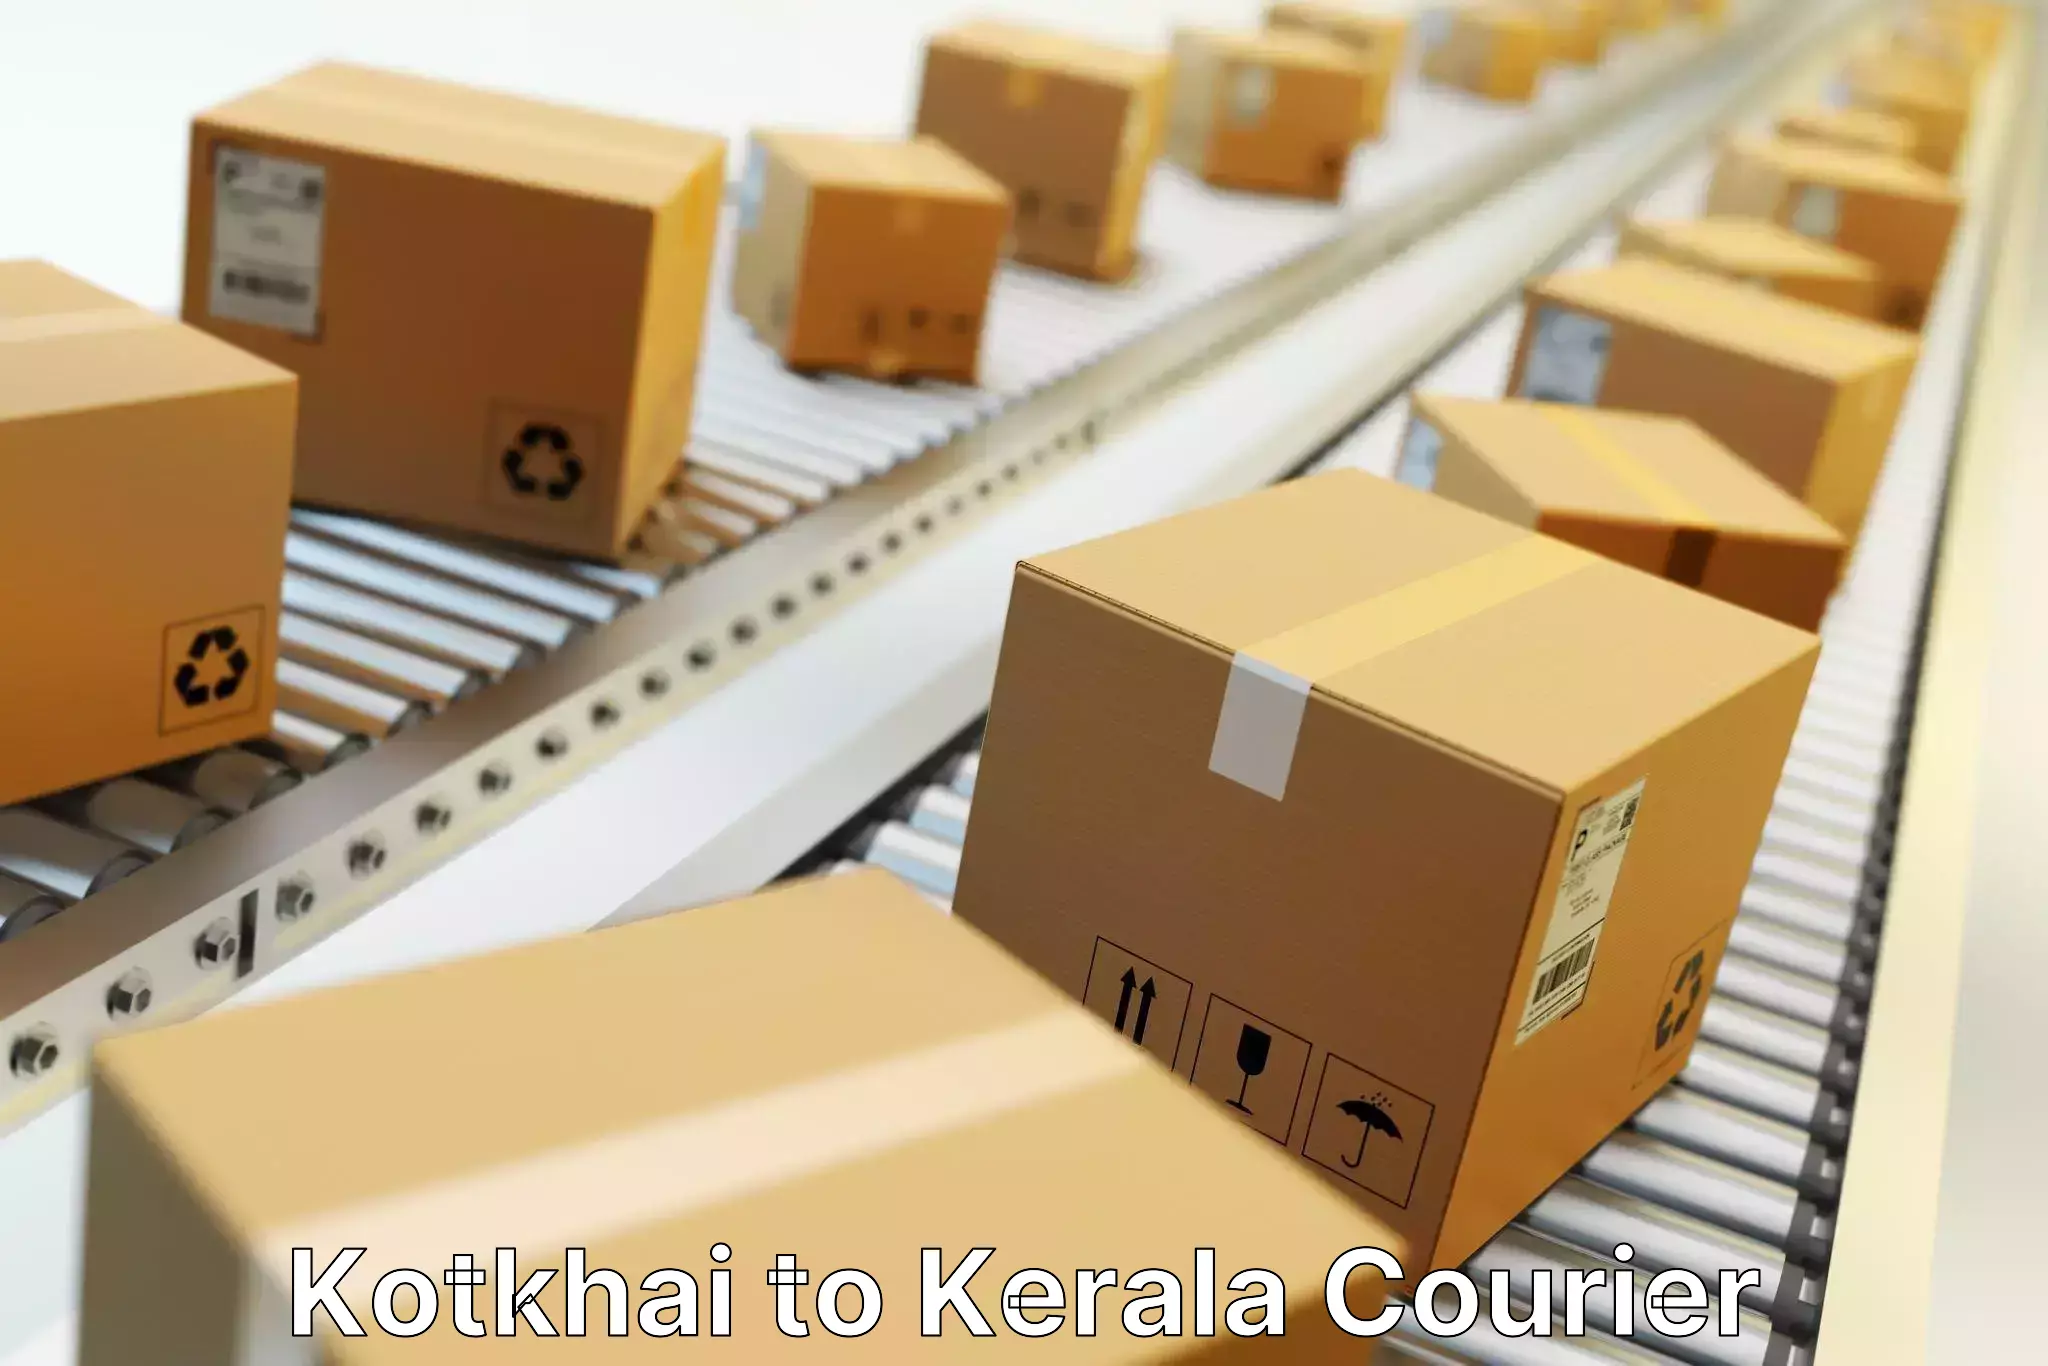 Multi-national courier services Kotkhai to Kochi